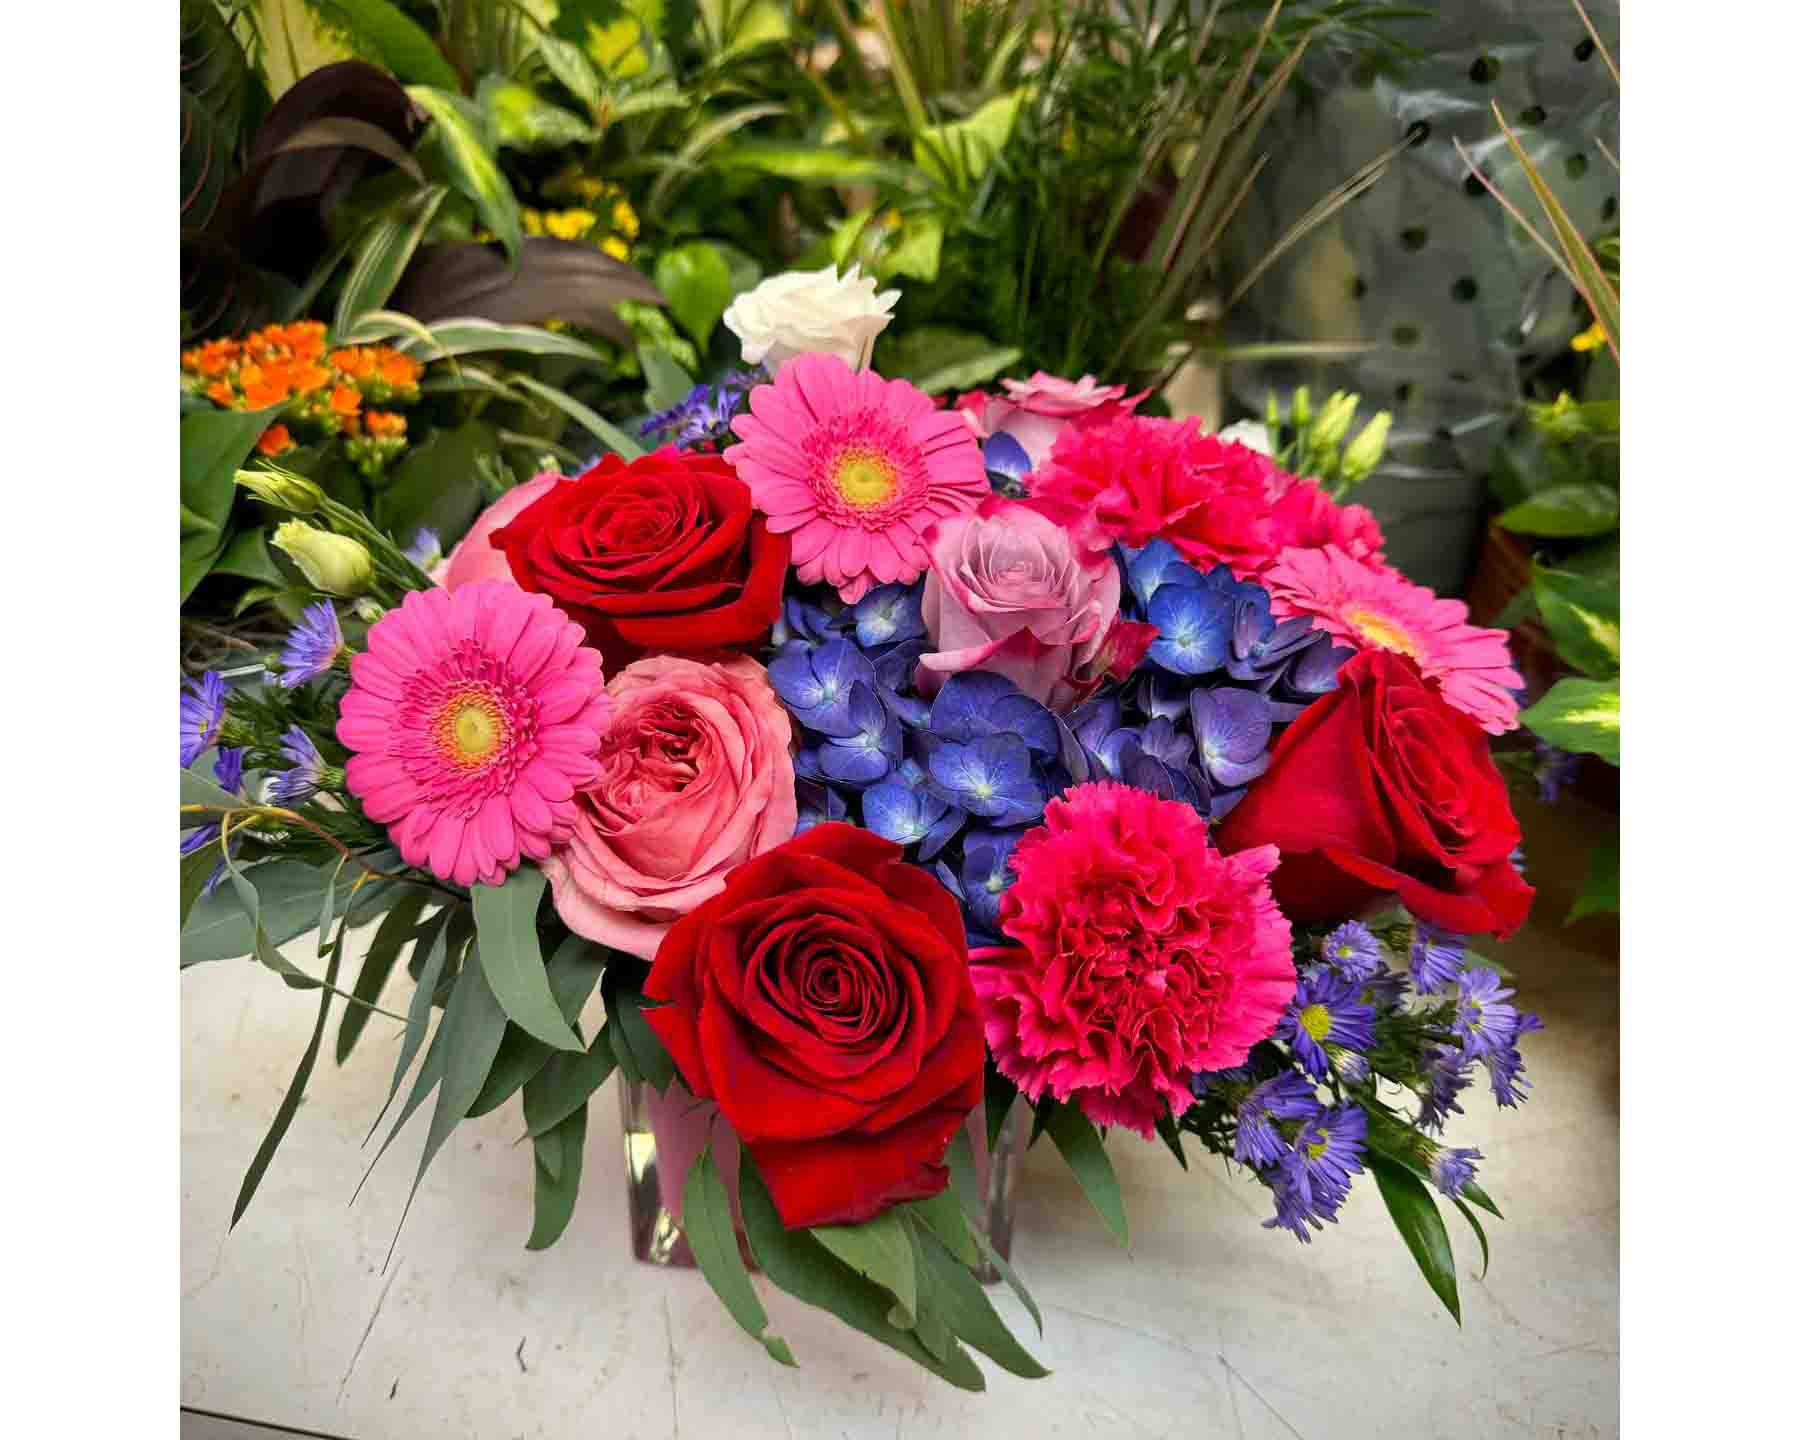 Frank Gallo Florist Presidents Day Flowers